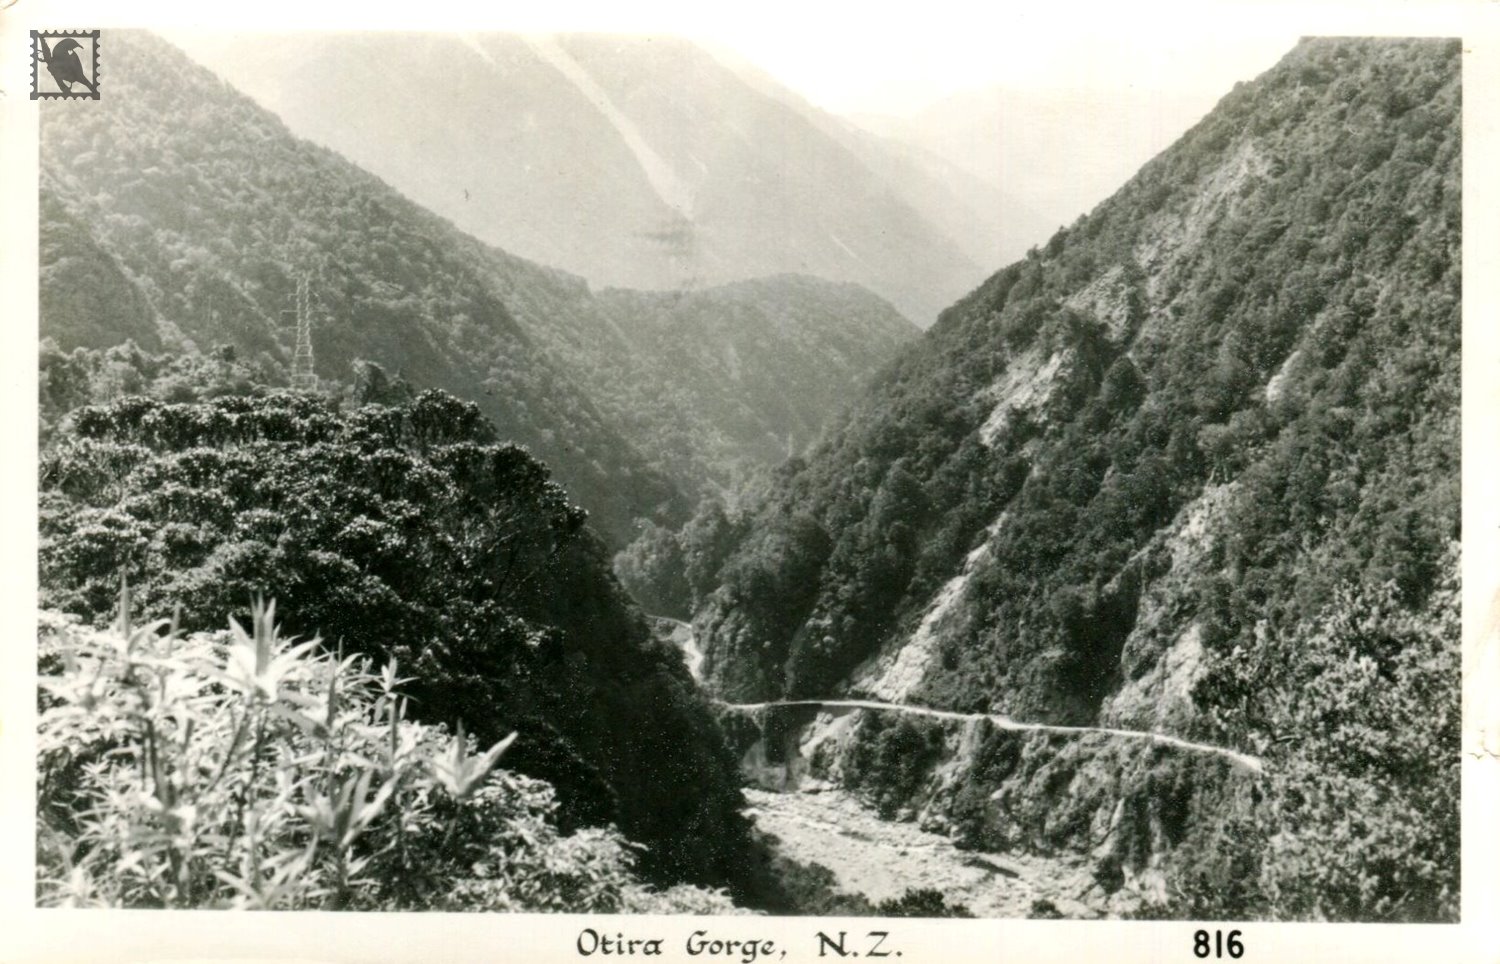 View of the Otira Gorge Road